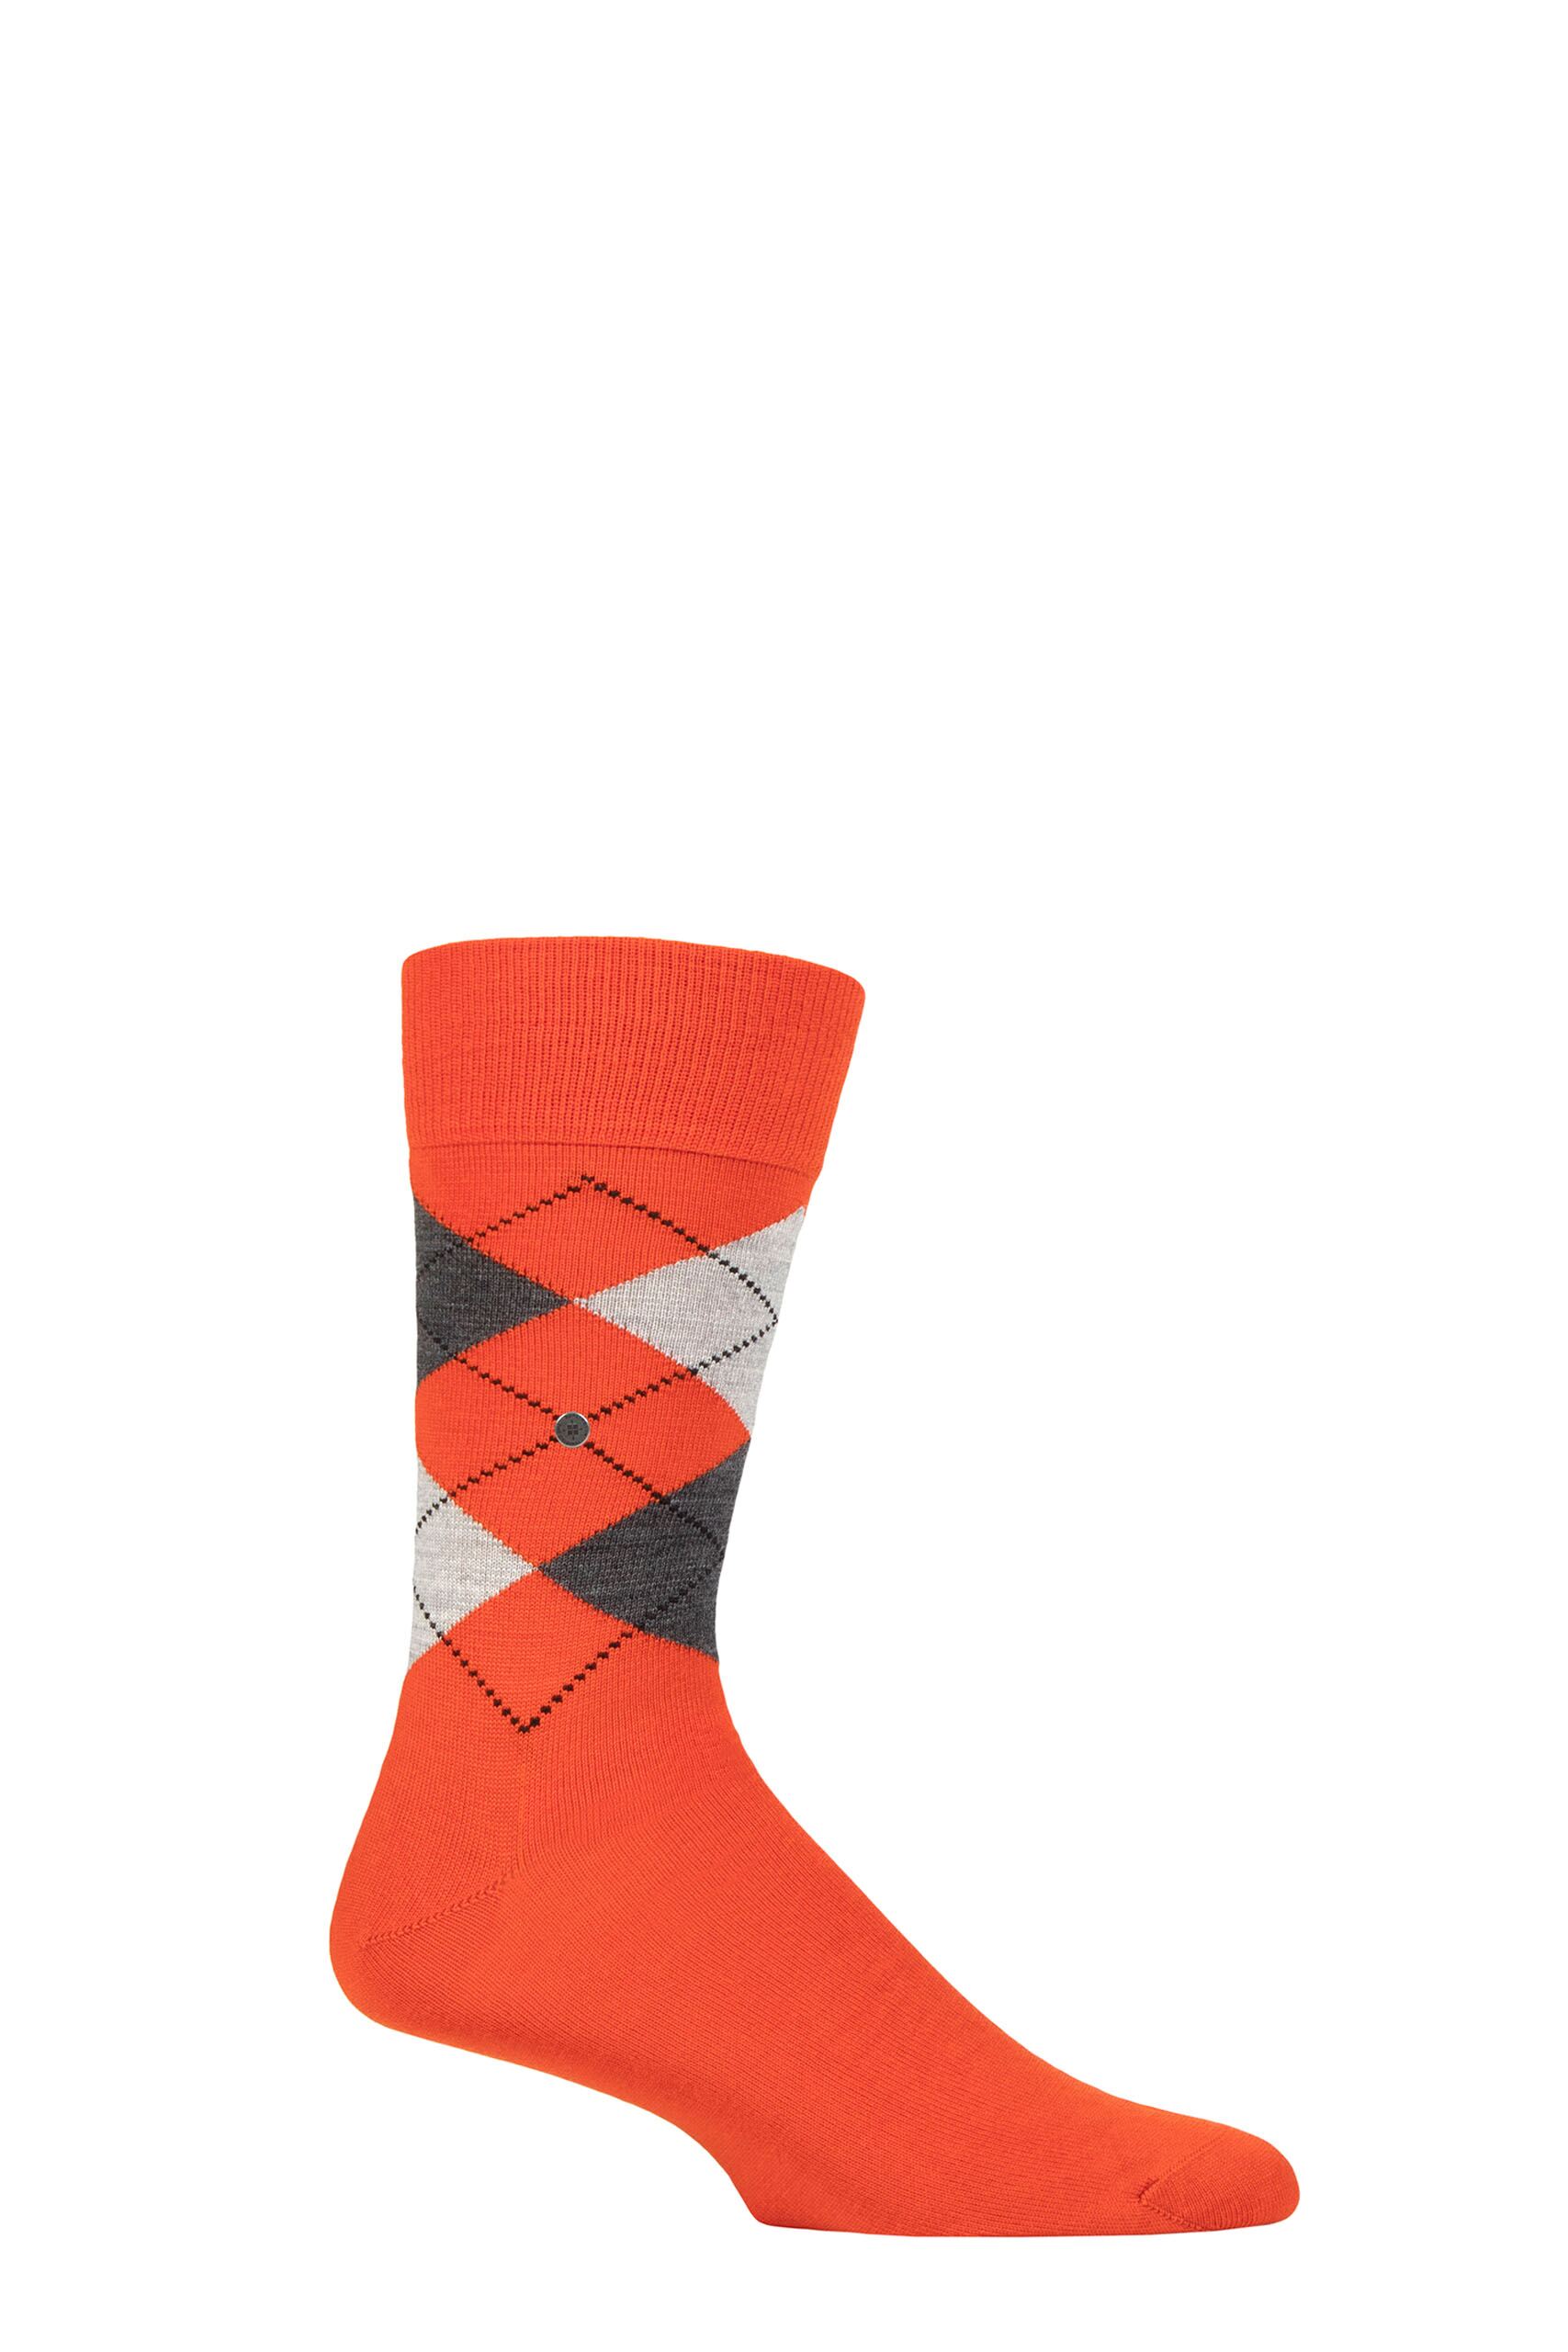 Mens 1 Pair Burlington Edinburgh Virgin Wool Argyle Socks Orange / Grey 11-14 Mens